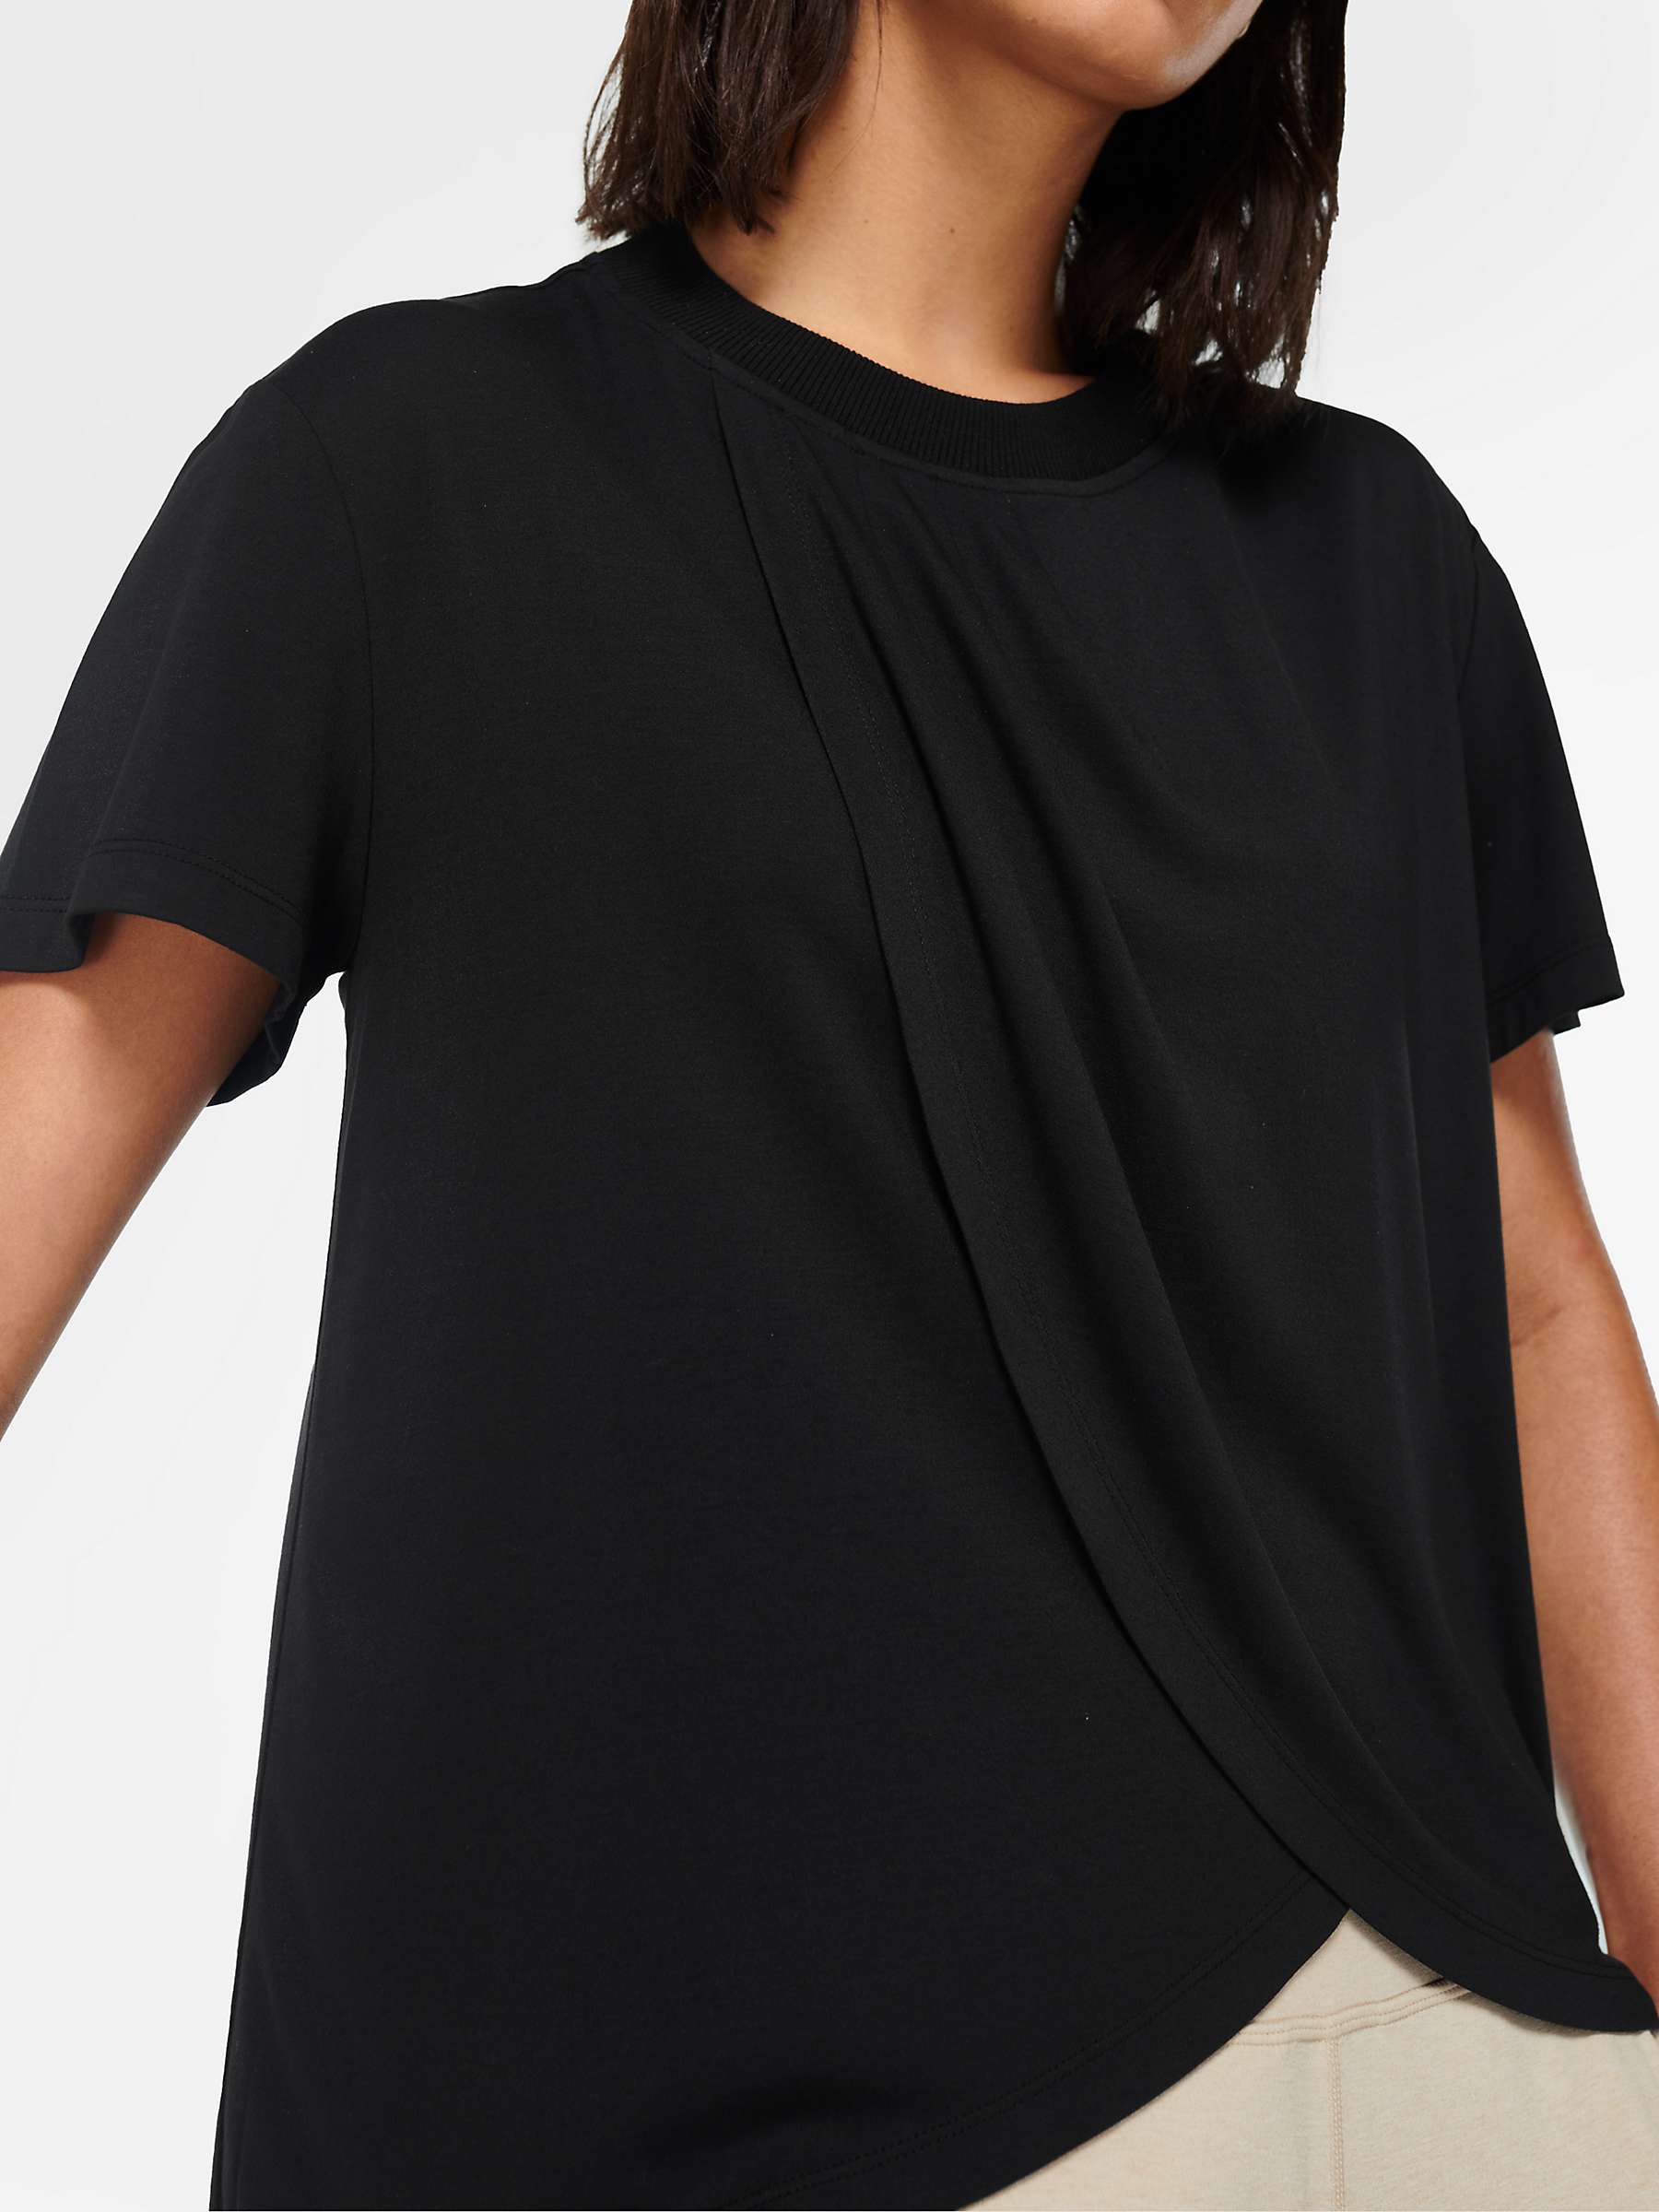 Sweaty Betty Loose Fit Twist T-Shirt, Black at John Lewis & Partners